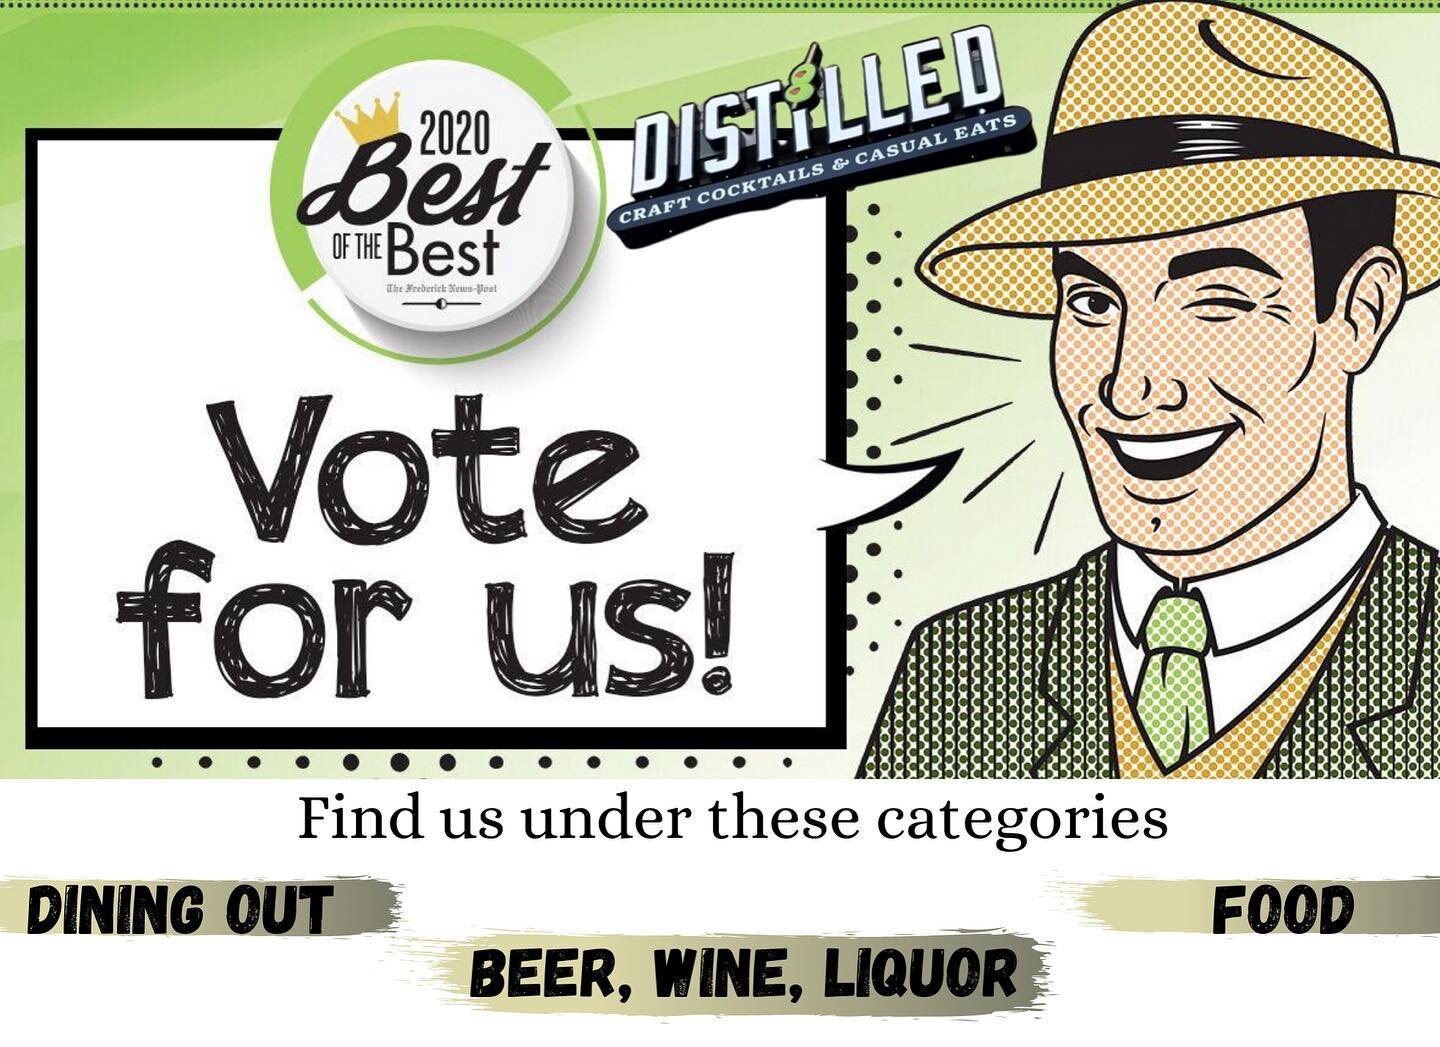 https://www.fredericknewspost.com/special/best_of_the_best/nominations/#//

👆Help Distilled reach the TOP FIVE 🖐
💯 Vote daily until Tuesday💯 

#votedistilled #bestofthebest #fnp #frederickmd #besthappyhour #bestcocktails #bestmargaritas #bestbusi